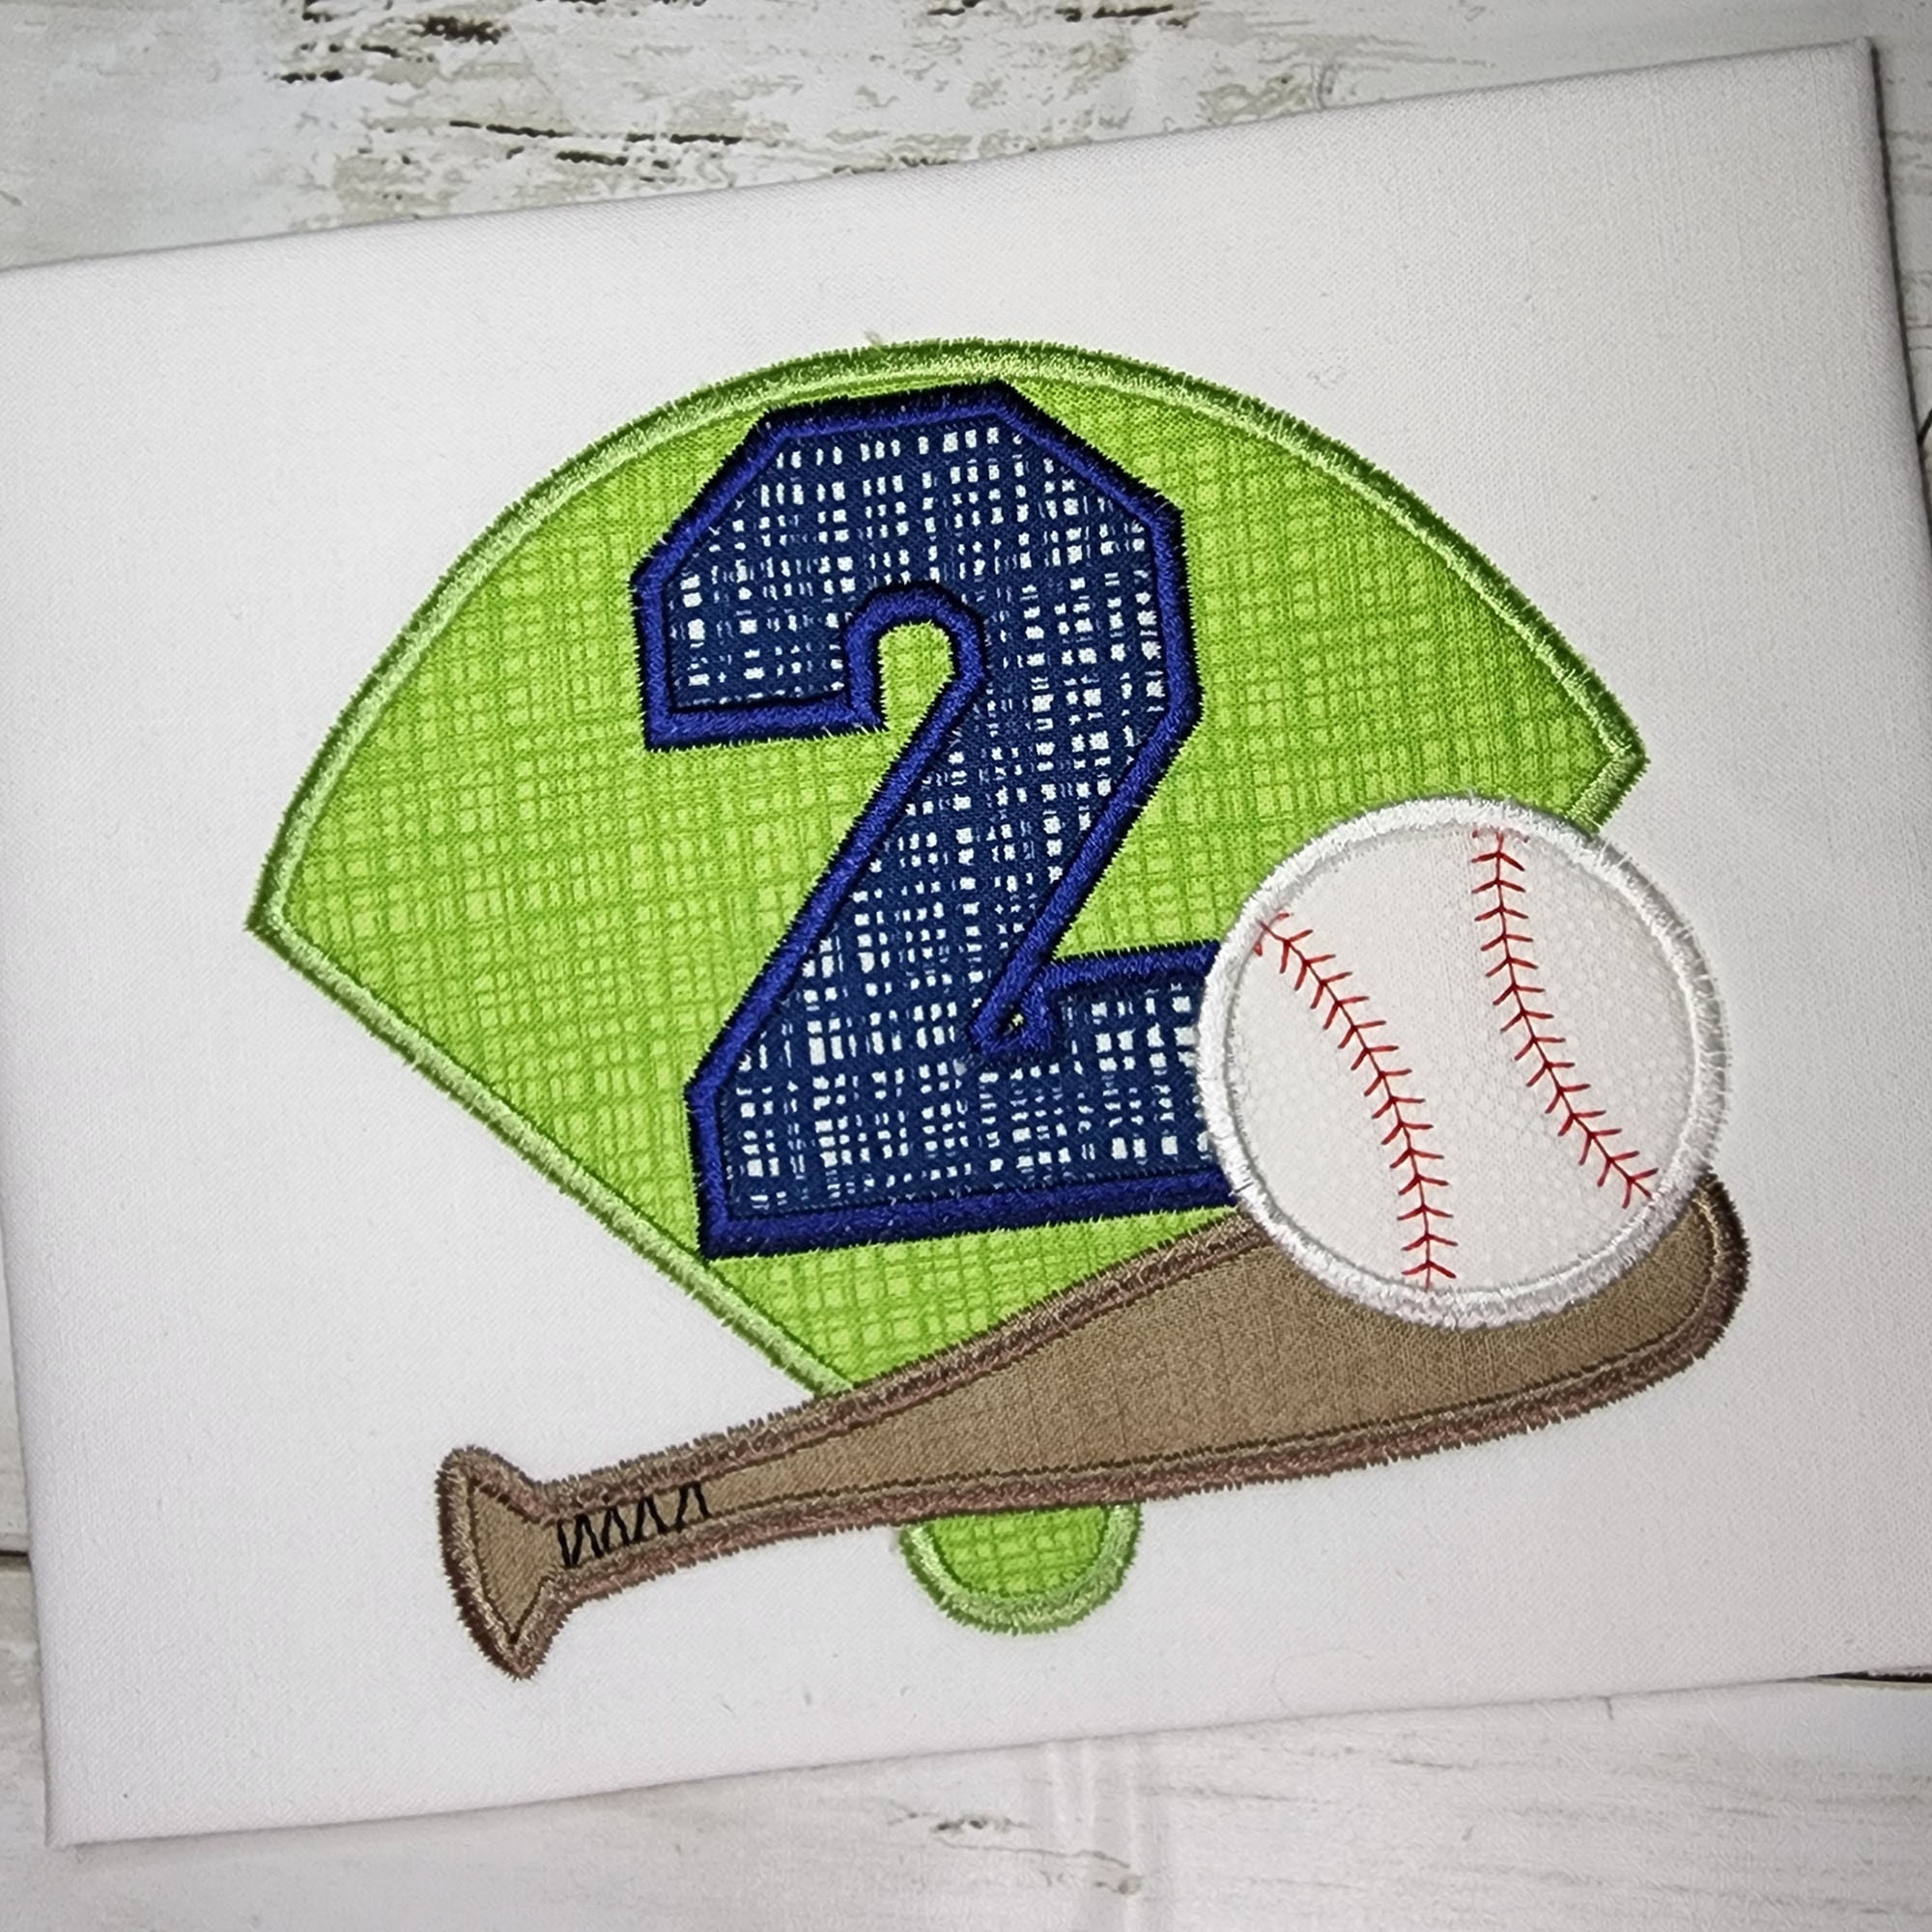 Baseball Number 2 - Machine Embroidery Design